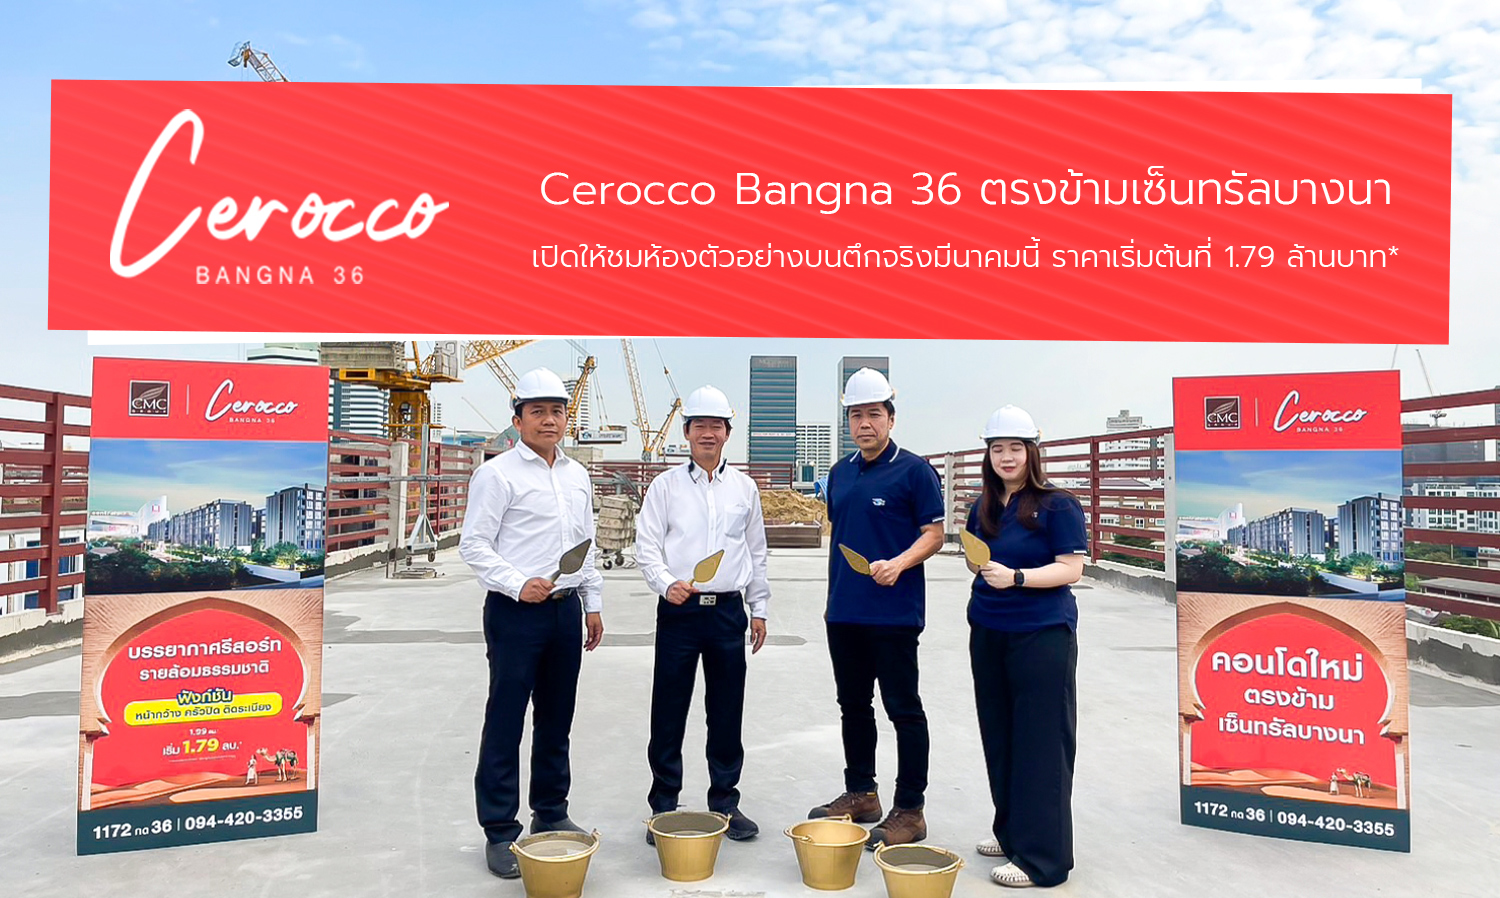 Cerocco Bangna 36 ตรงข้ามเซ็นทรัลบางนา เปิดให้ชมห้องตัวอย่างบนตึกจริงมีนาคมนี้ ราคาเริ่มต้นที่ 1.79 ล้านบาท